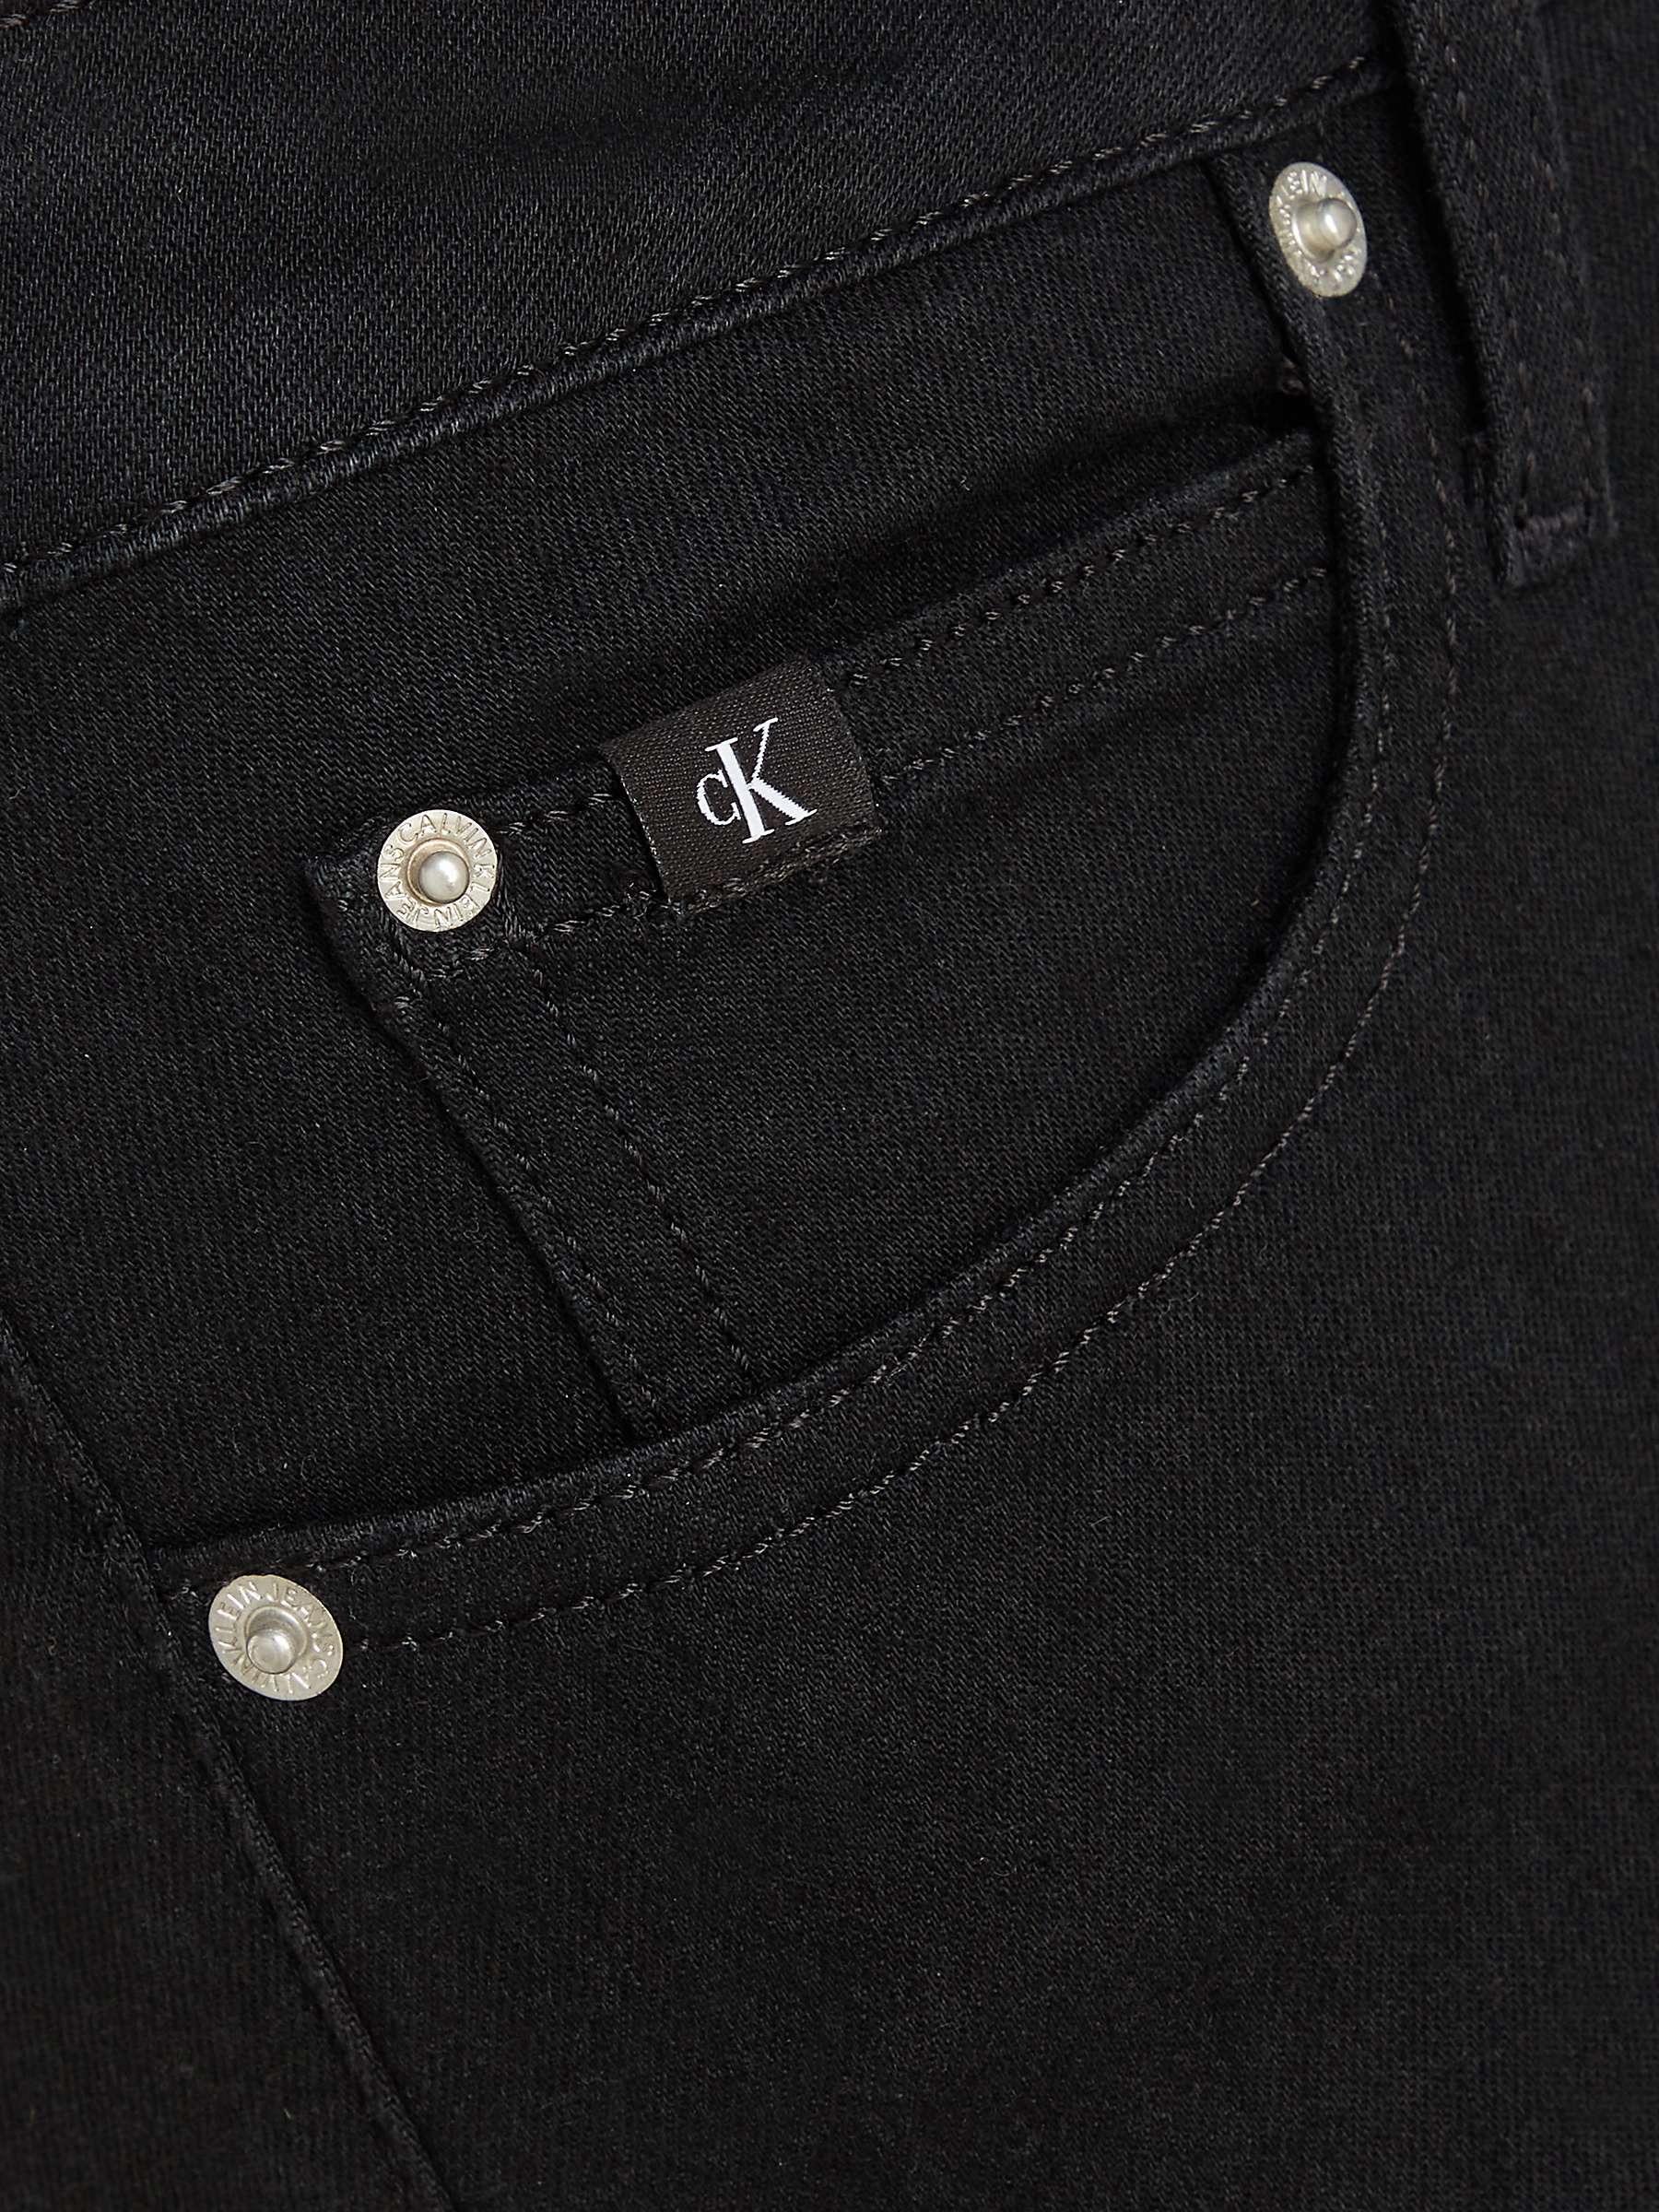 Buy Calvin Klein Mid Rise Skinny Jeans, Black Online at johnlewis.com